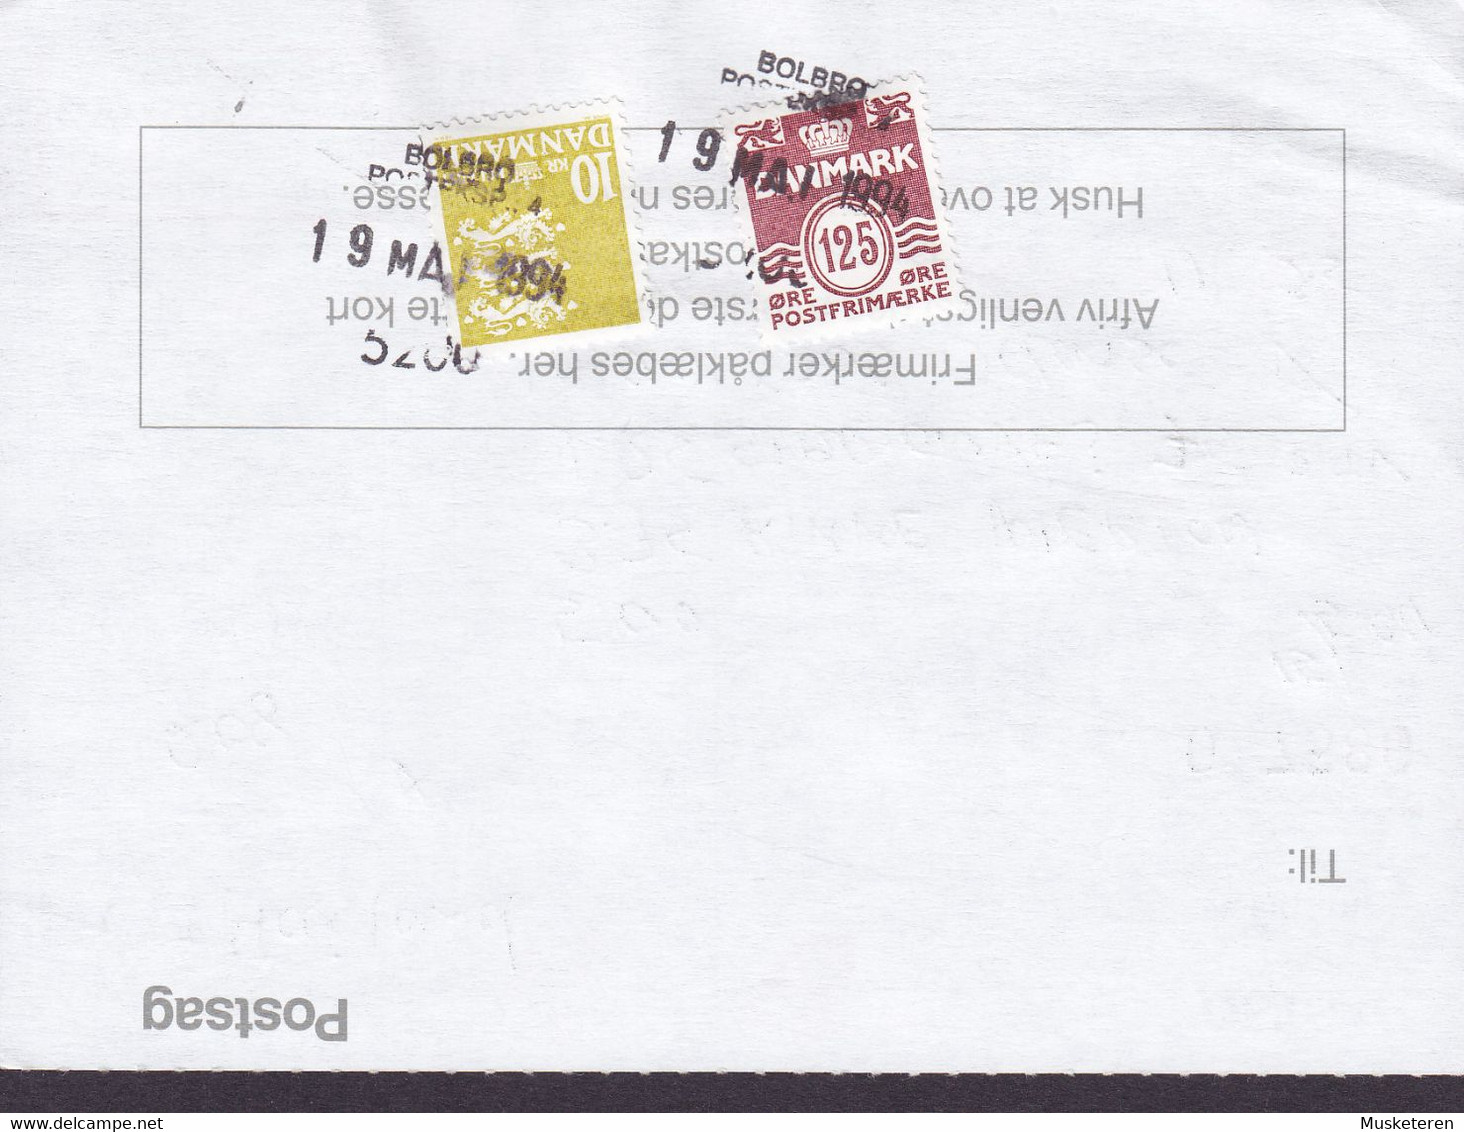 Denmark Regning Manglende Porto Bill TAXE Postage Due Thailand Line Cds. BOLBRO POSTEKSP. 1994 Postsag (2 Scans) - Brieven En Documenten